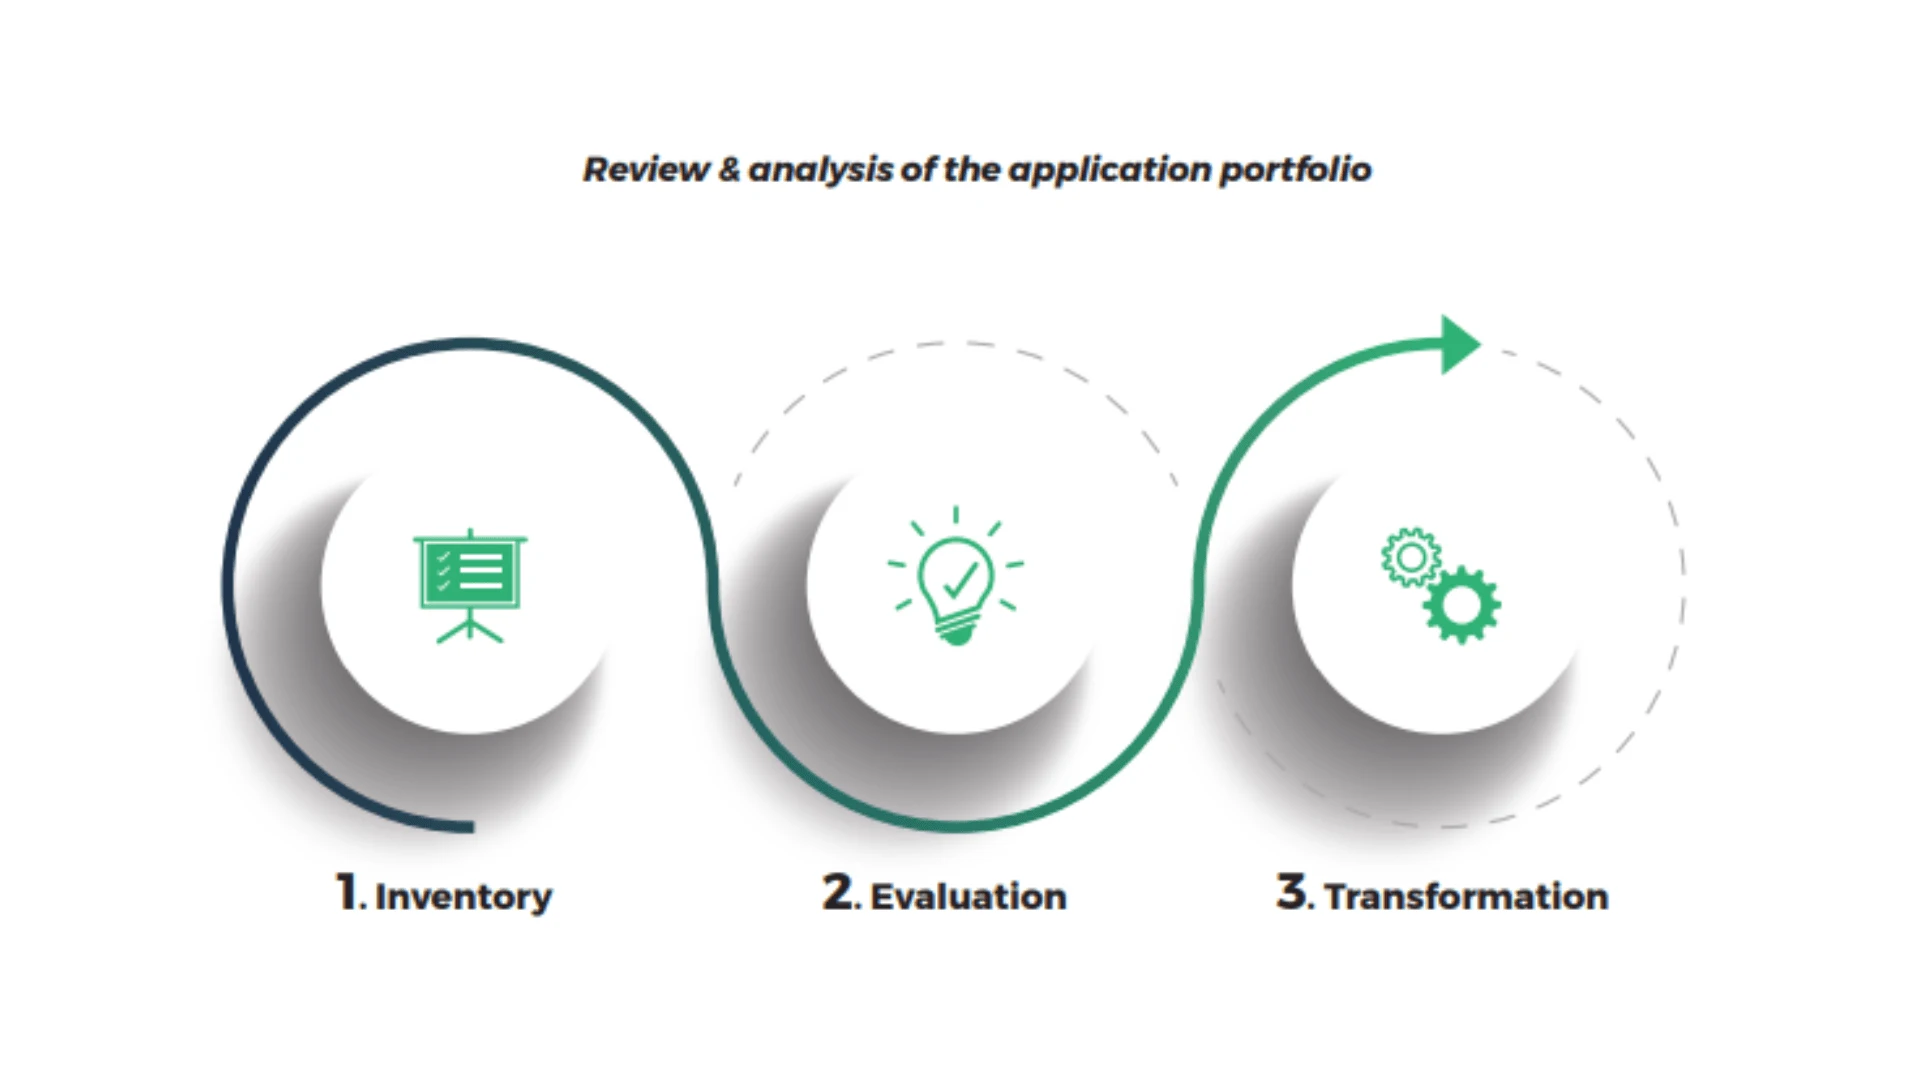 Analyses of the application portfolio